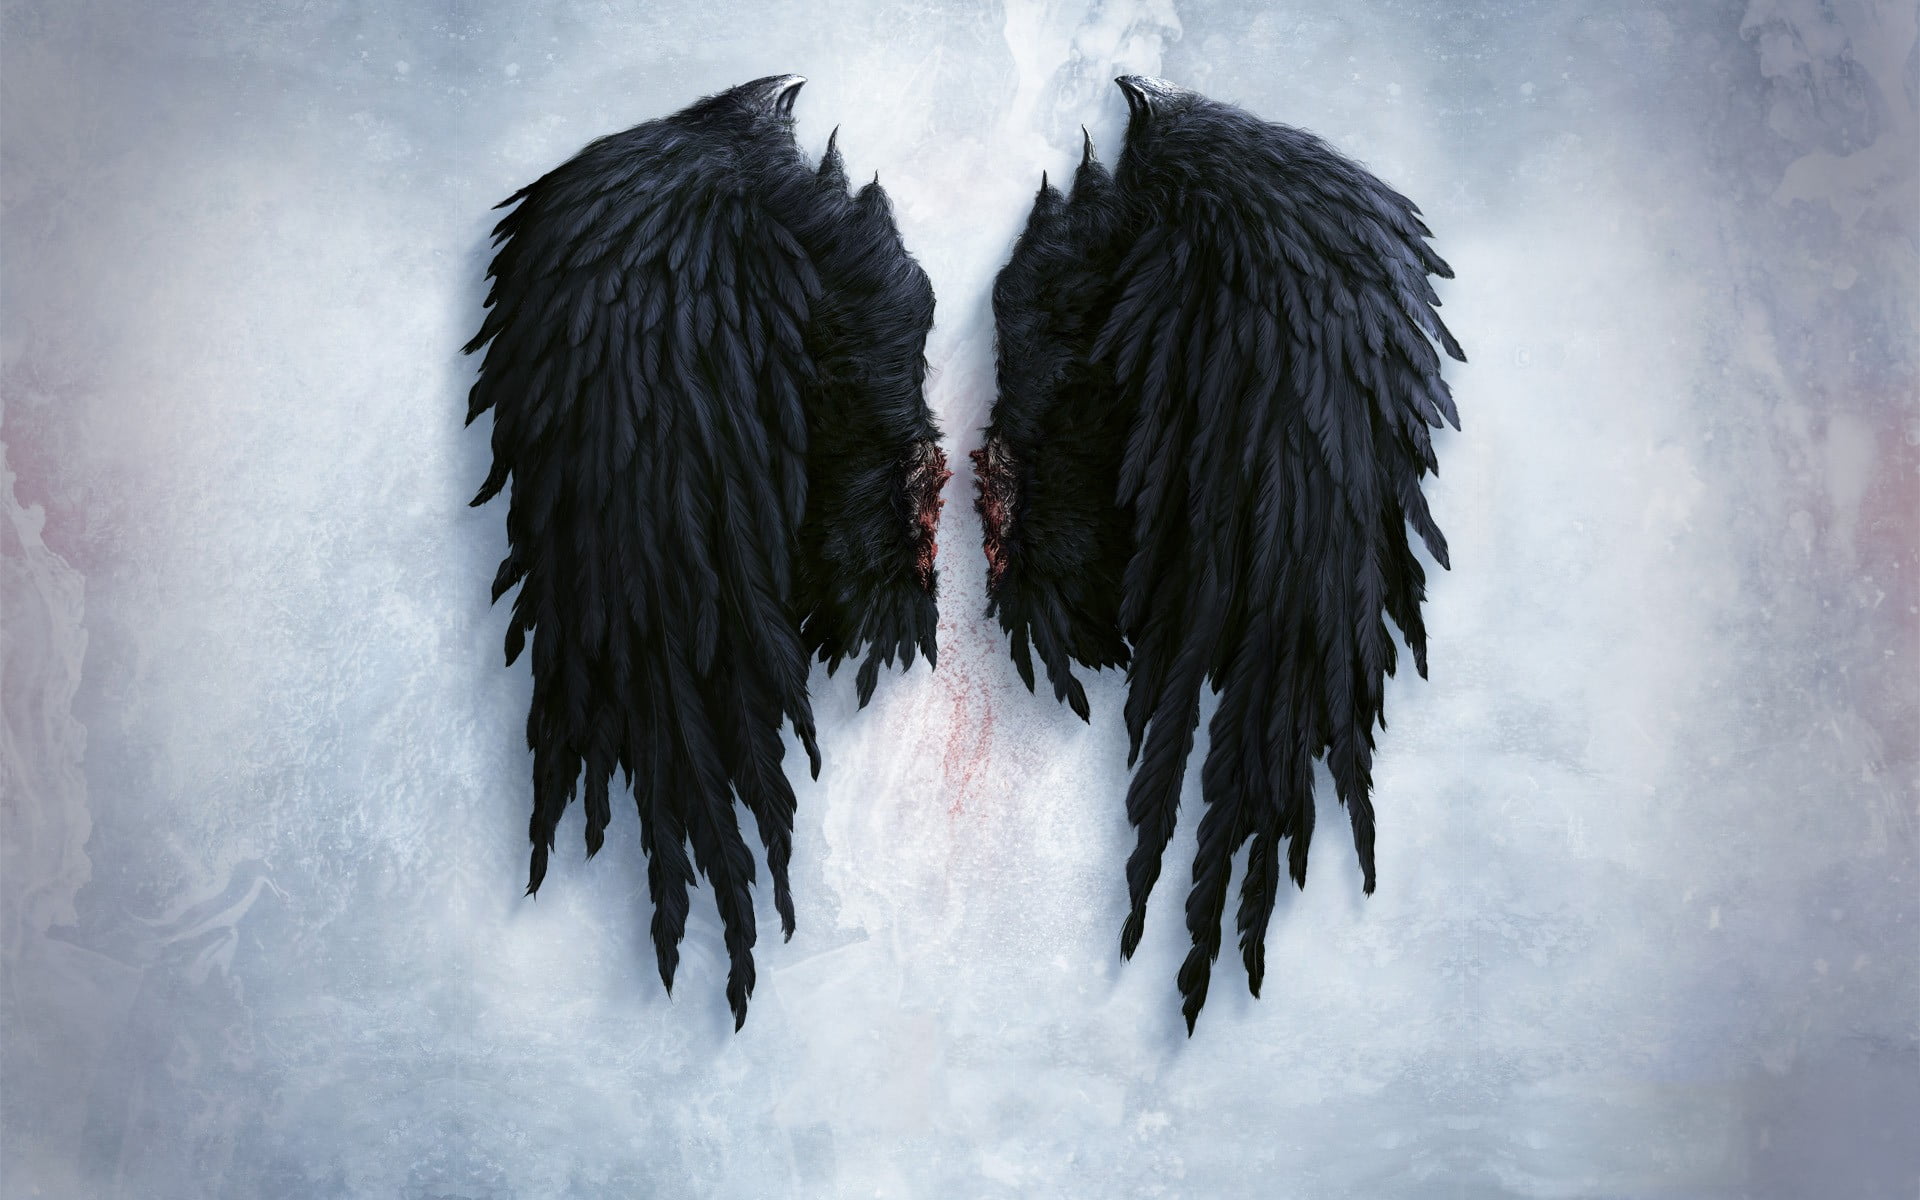 black wings illustration, fantasy art, artwork, angel, wings